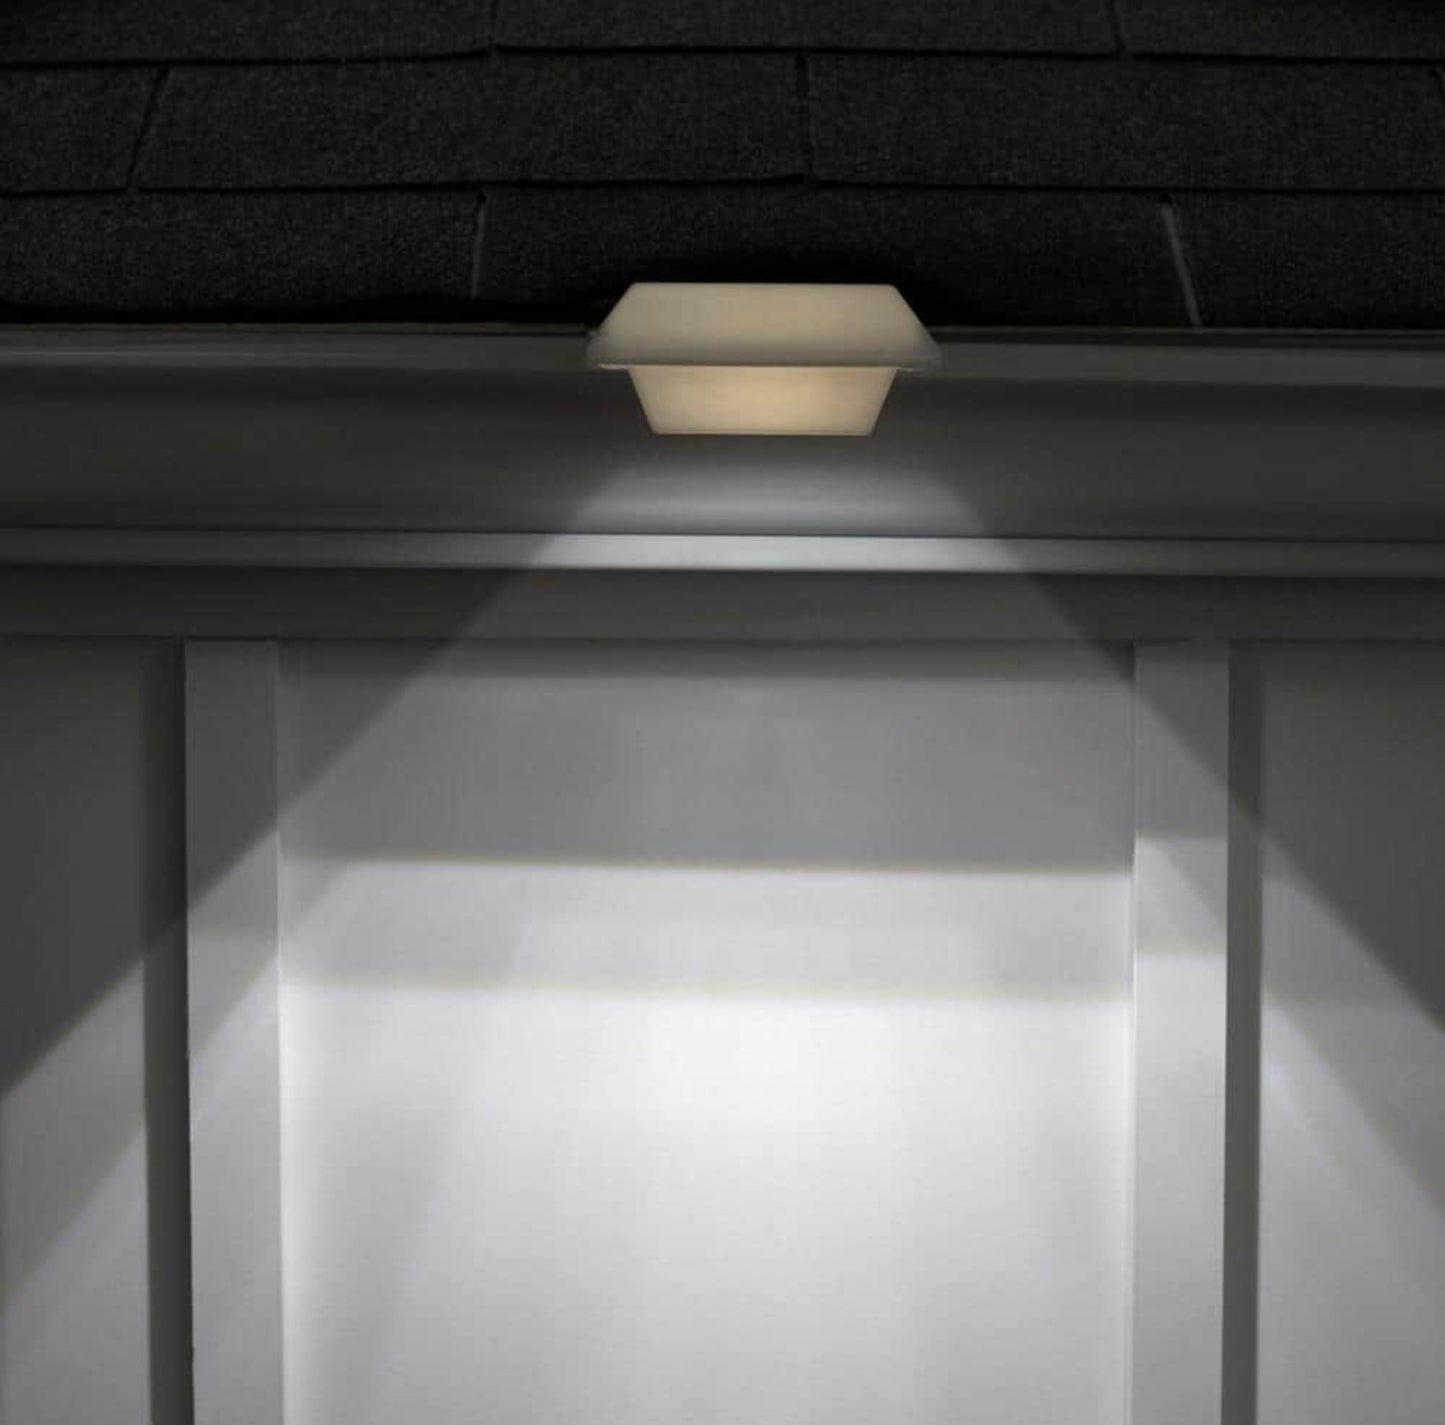 Hampton Bay Solar Powered Integrated LED White Roof Gutter Light (4-Pack) Damaged Box